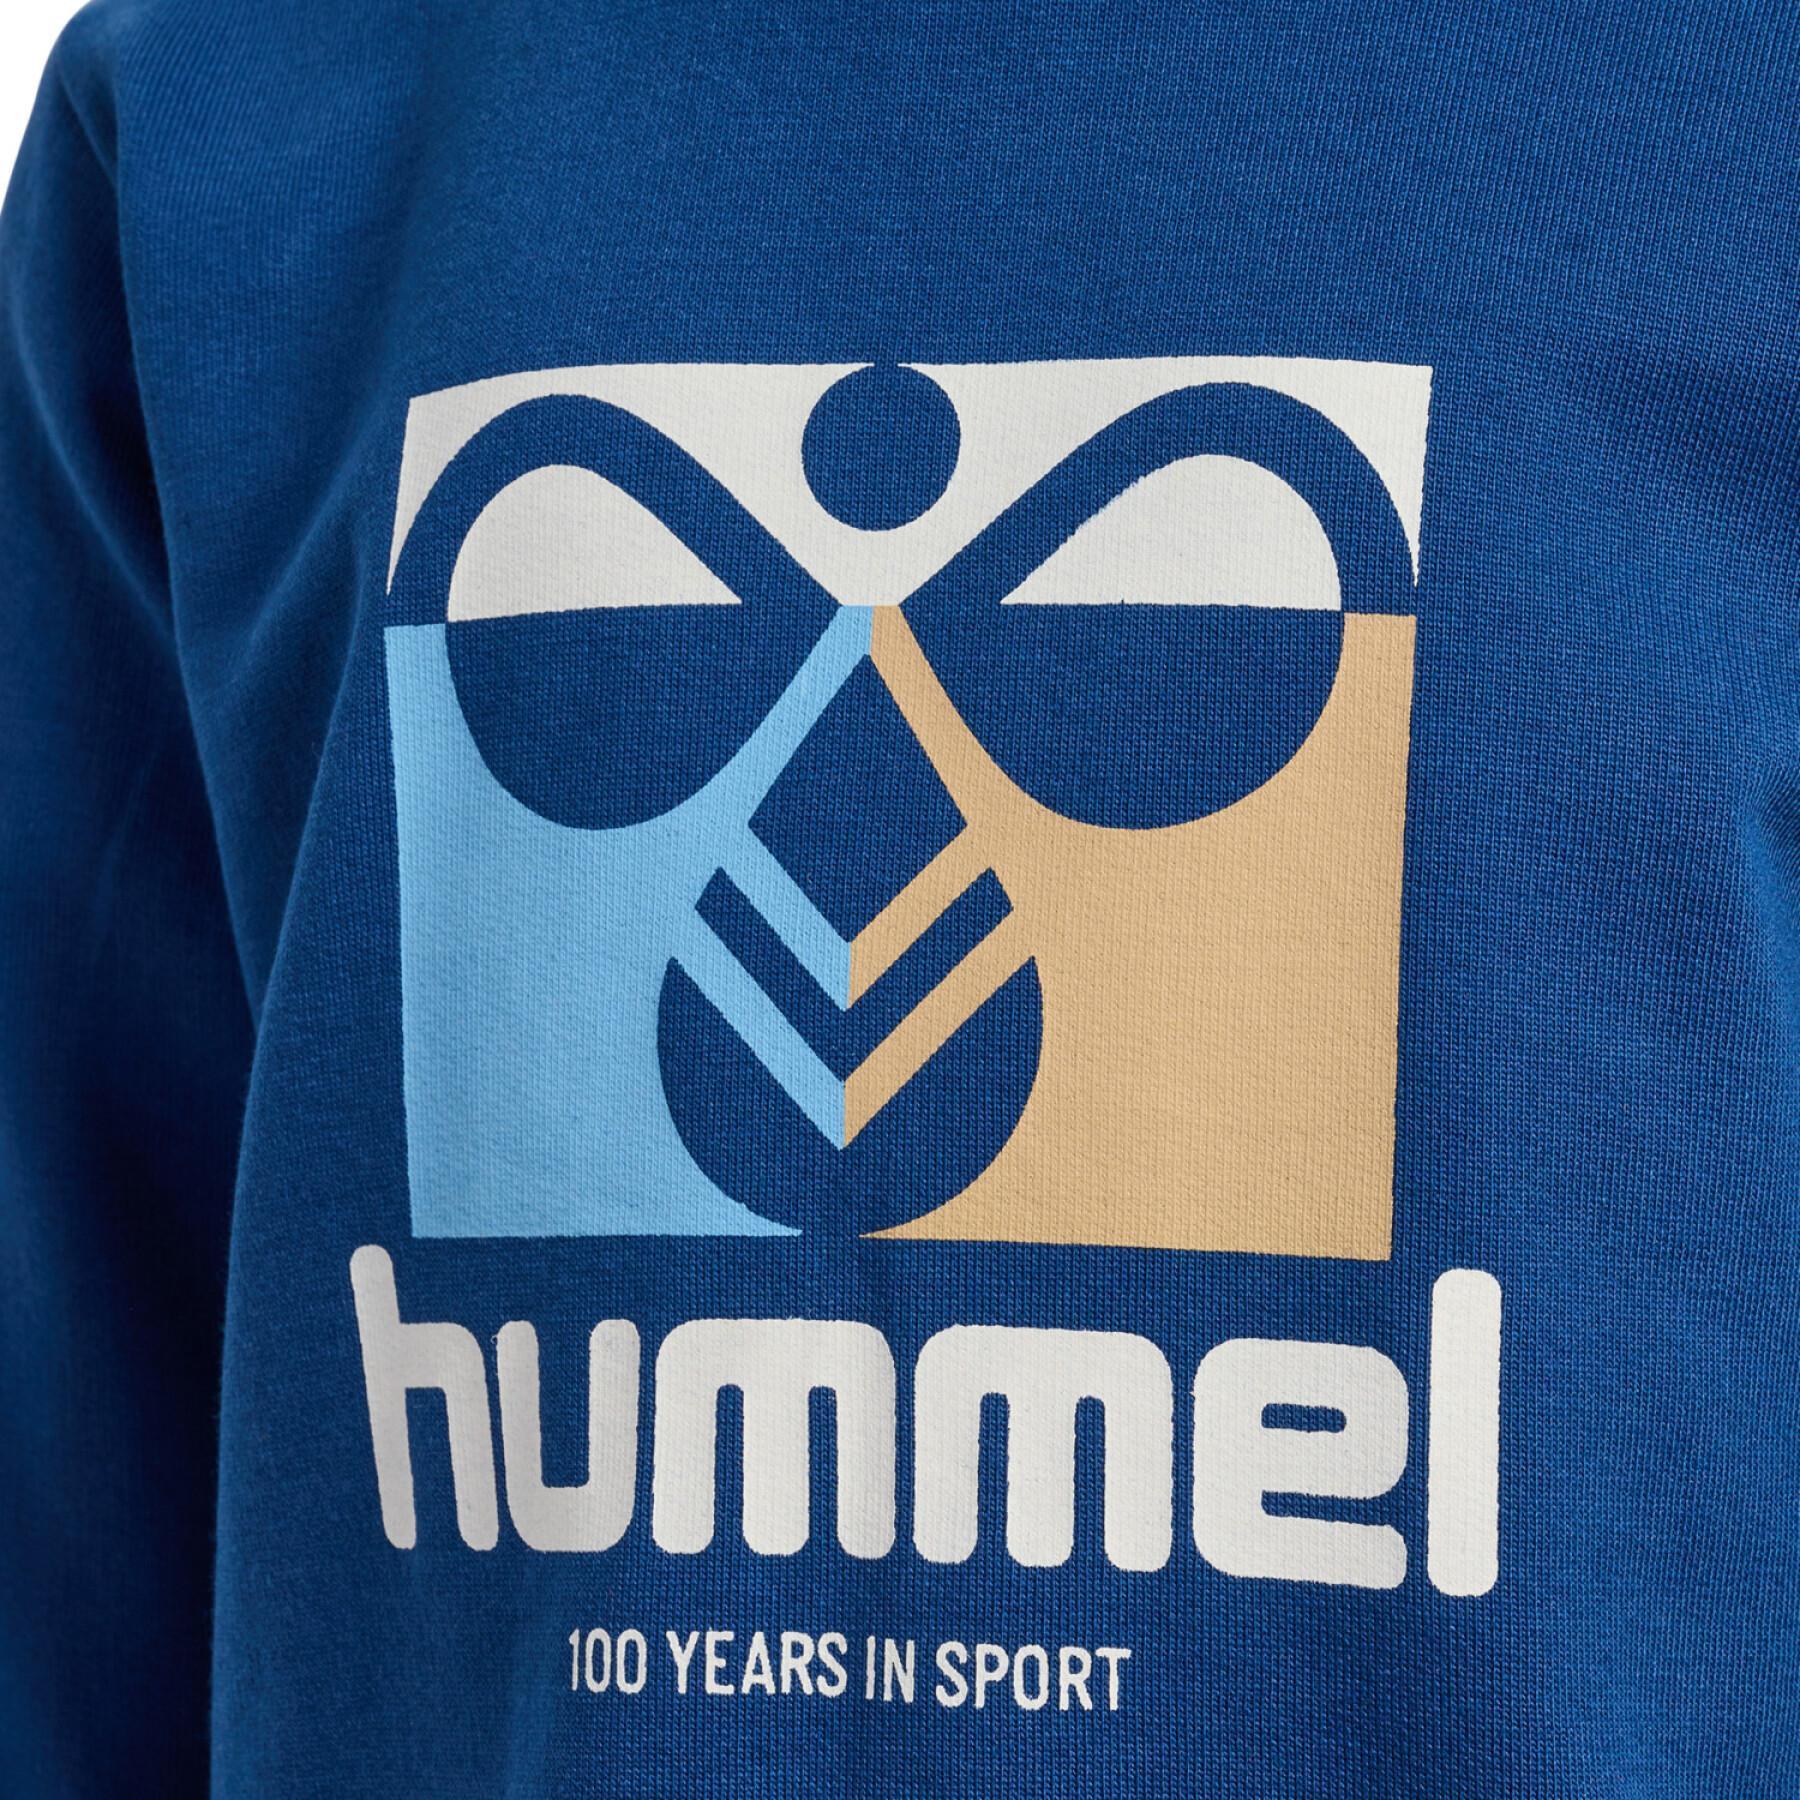 Sweatshirt bébé Hummel hmlLime